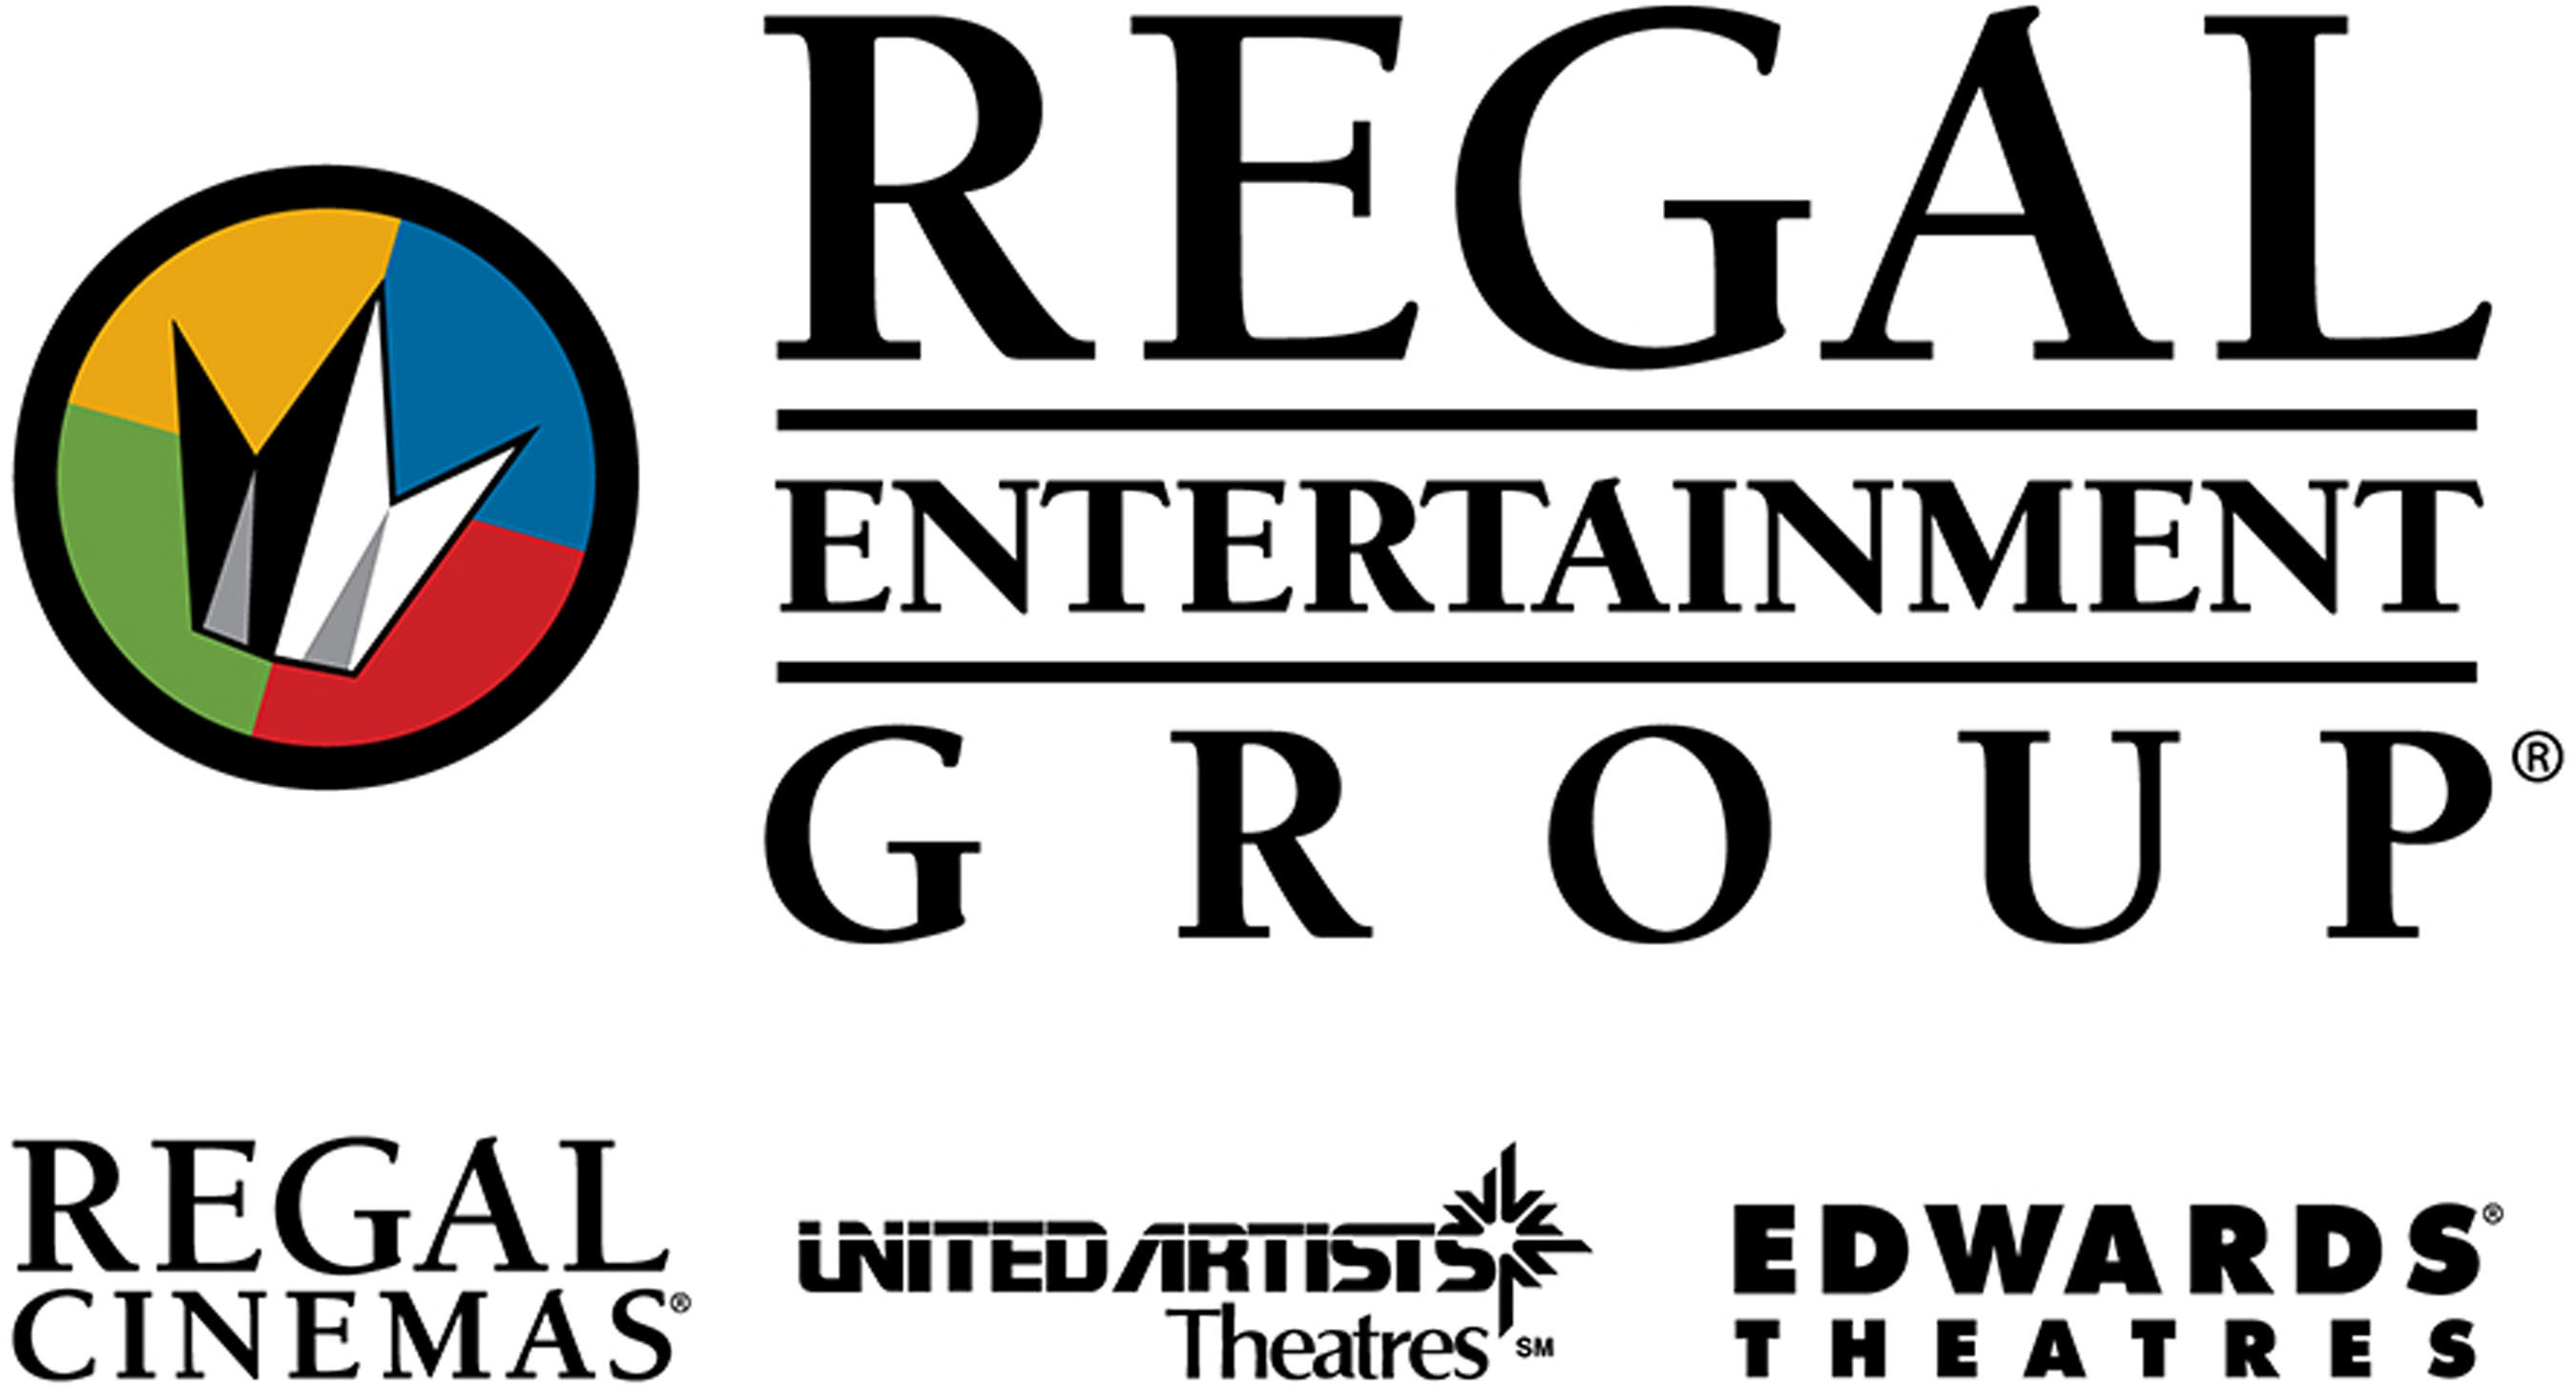 Regal Entertainment Group (PRNewsFoto/Regal Entertainment Group) (PRNewsFoto/Regal Entertainment Group)